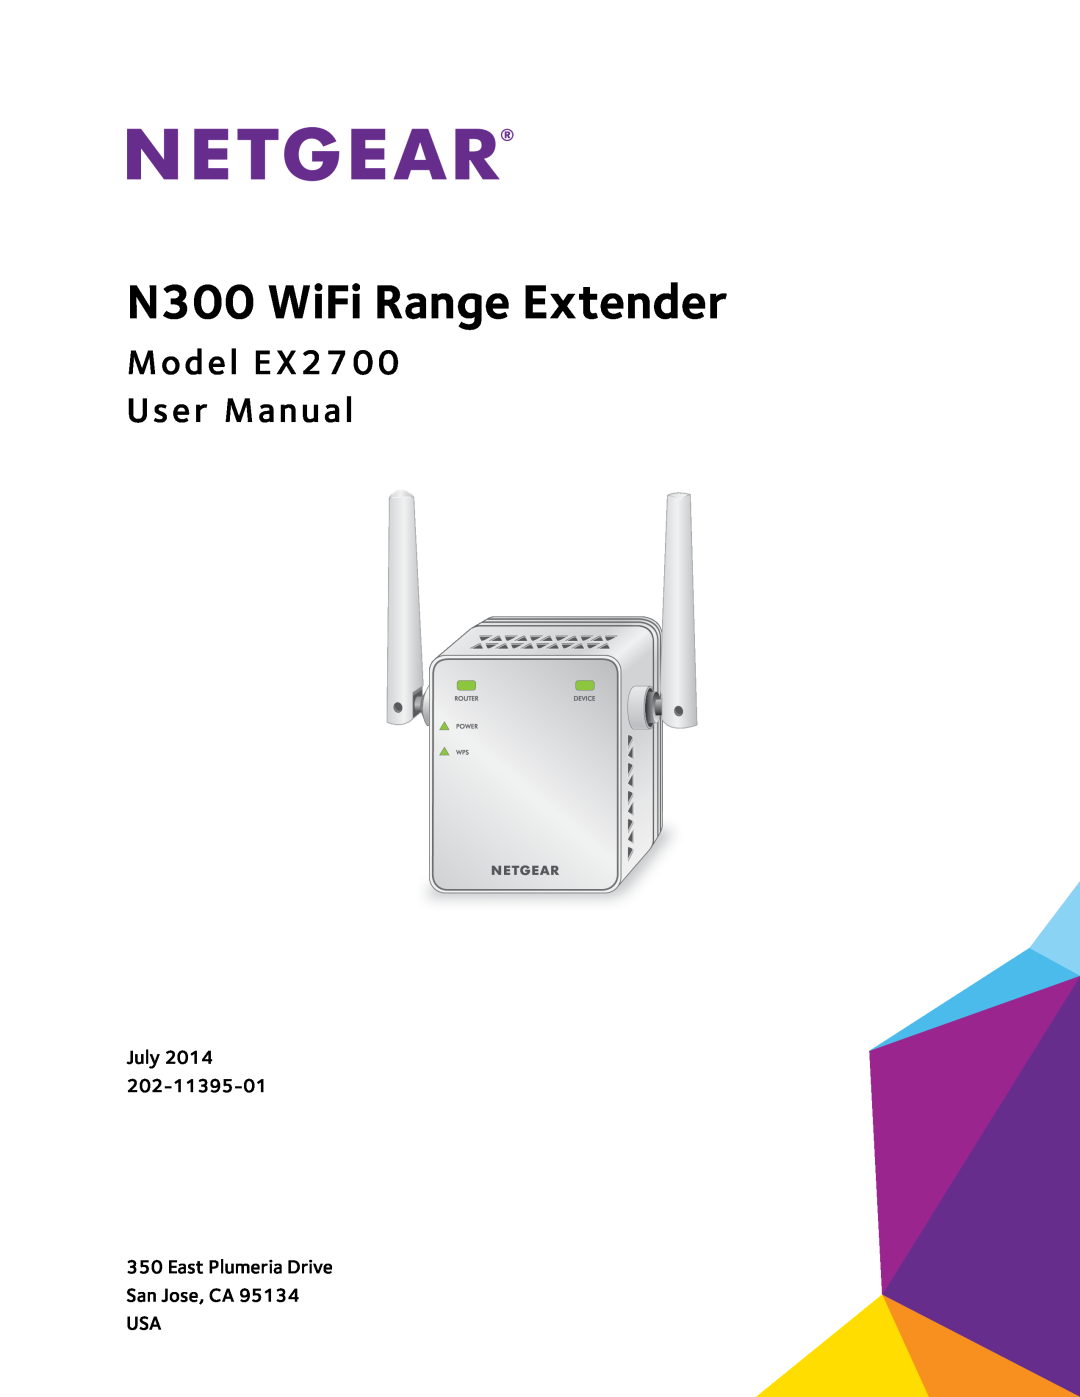 NETGEAR manual Installation, N300 WiFi Range Extender, Model EX2700 